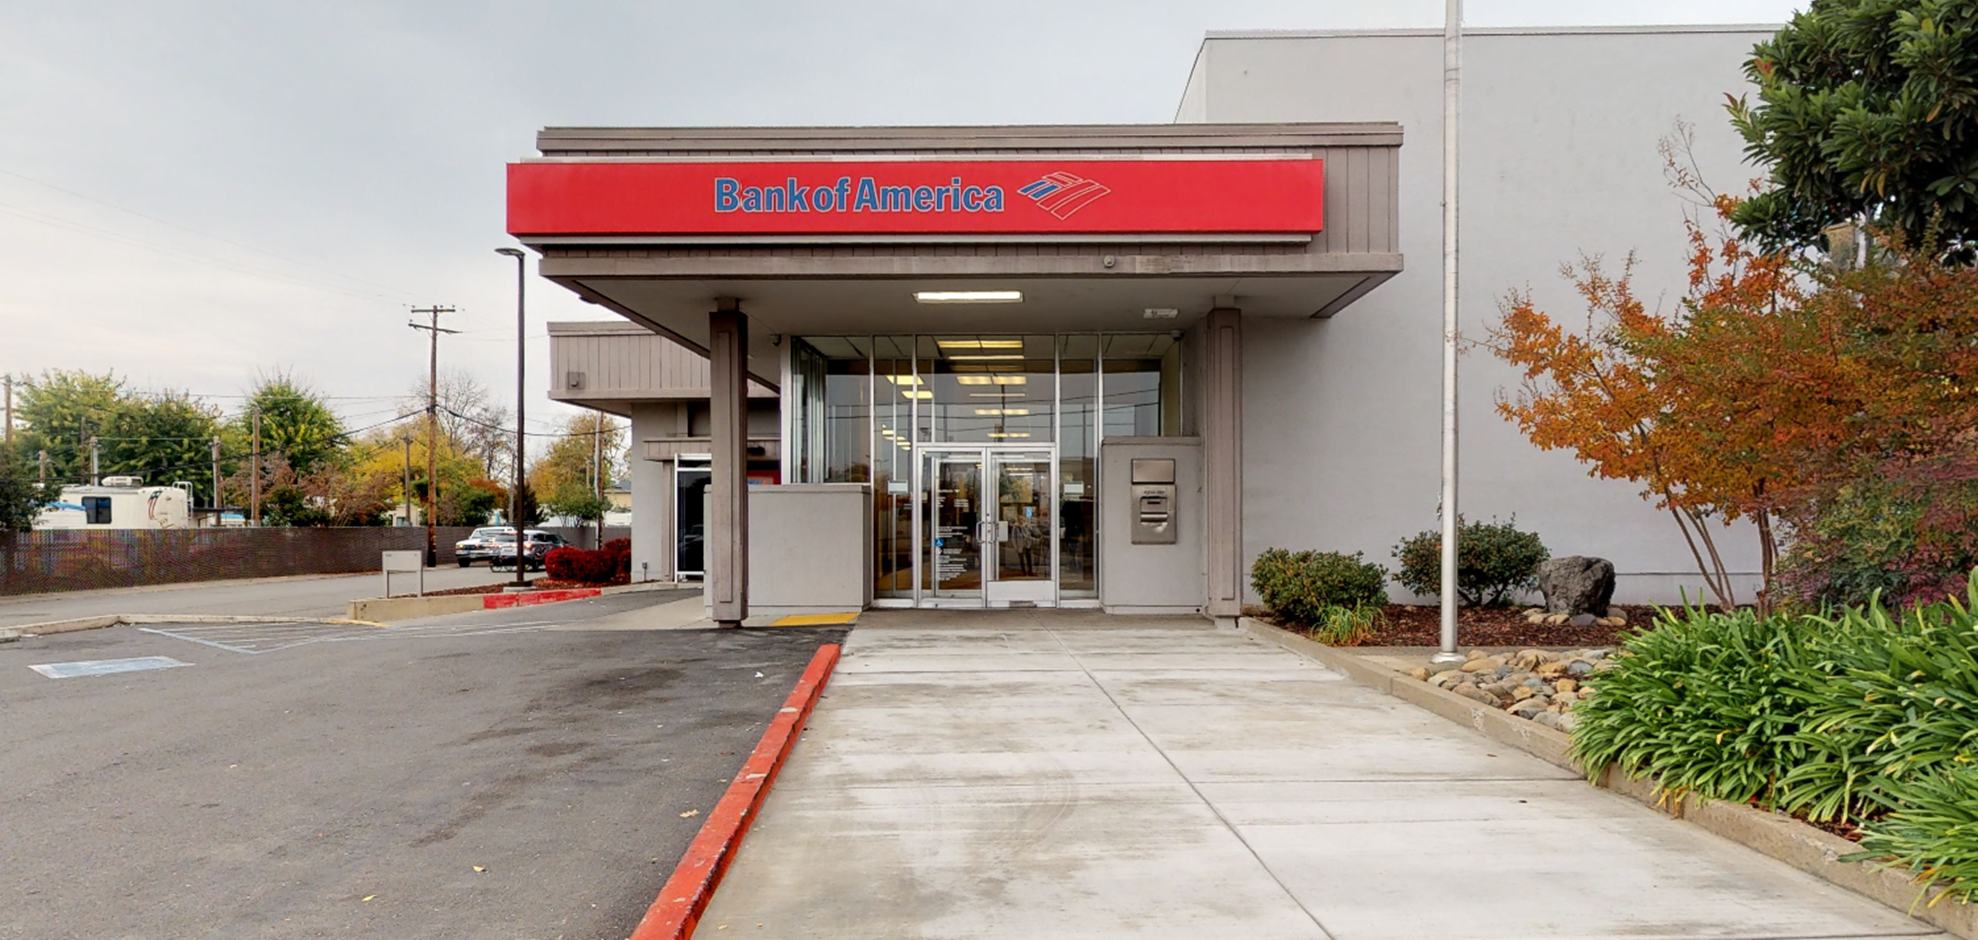 Bank of America financial center with drive-thru ATM | 5744 Stockton Blvd, Sacramento, CA 95824